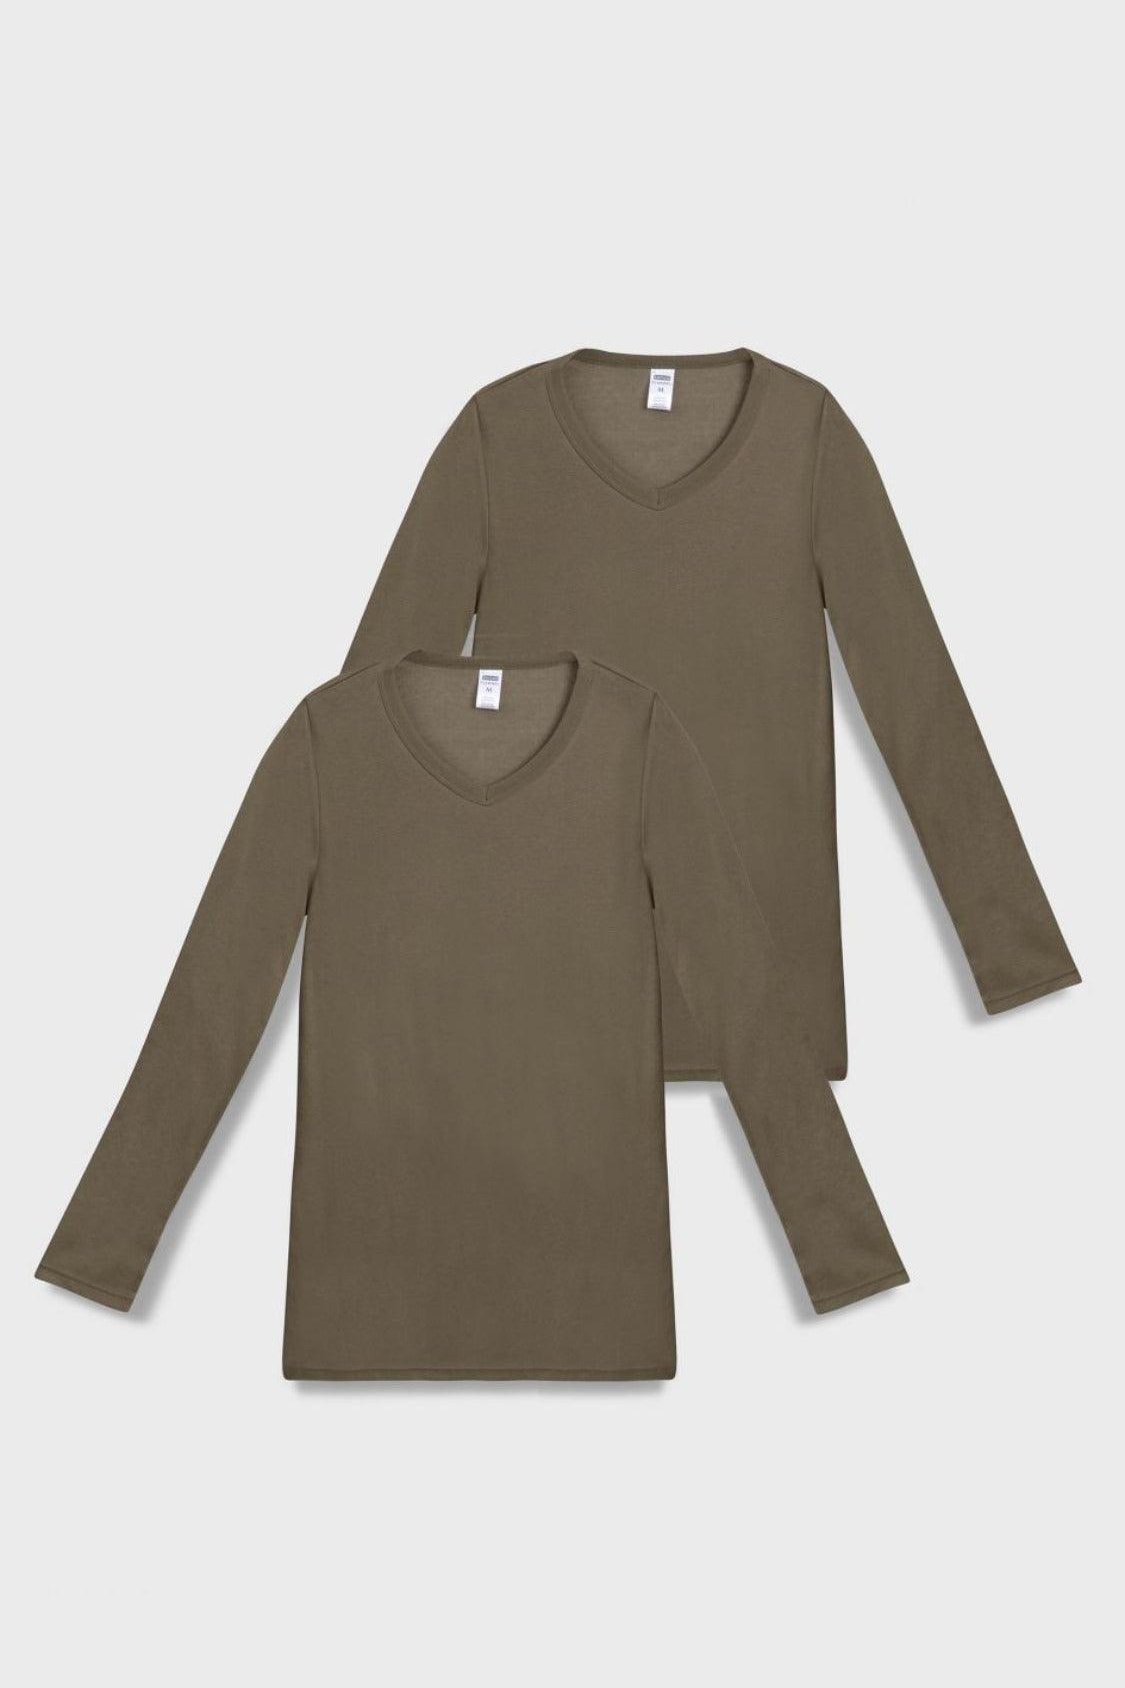 DELTA - זוג חולצות פלנל צווארון וי בצבע זית - MASHBIR//365